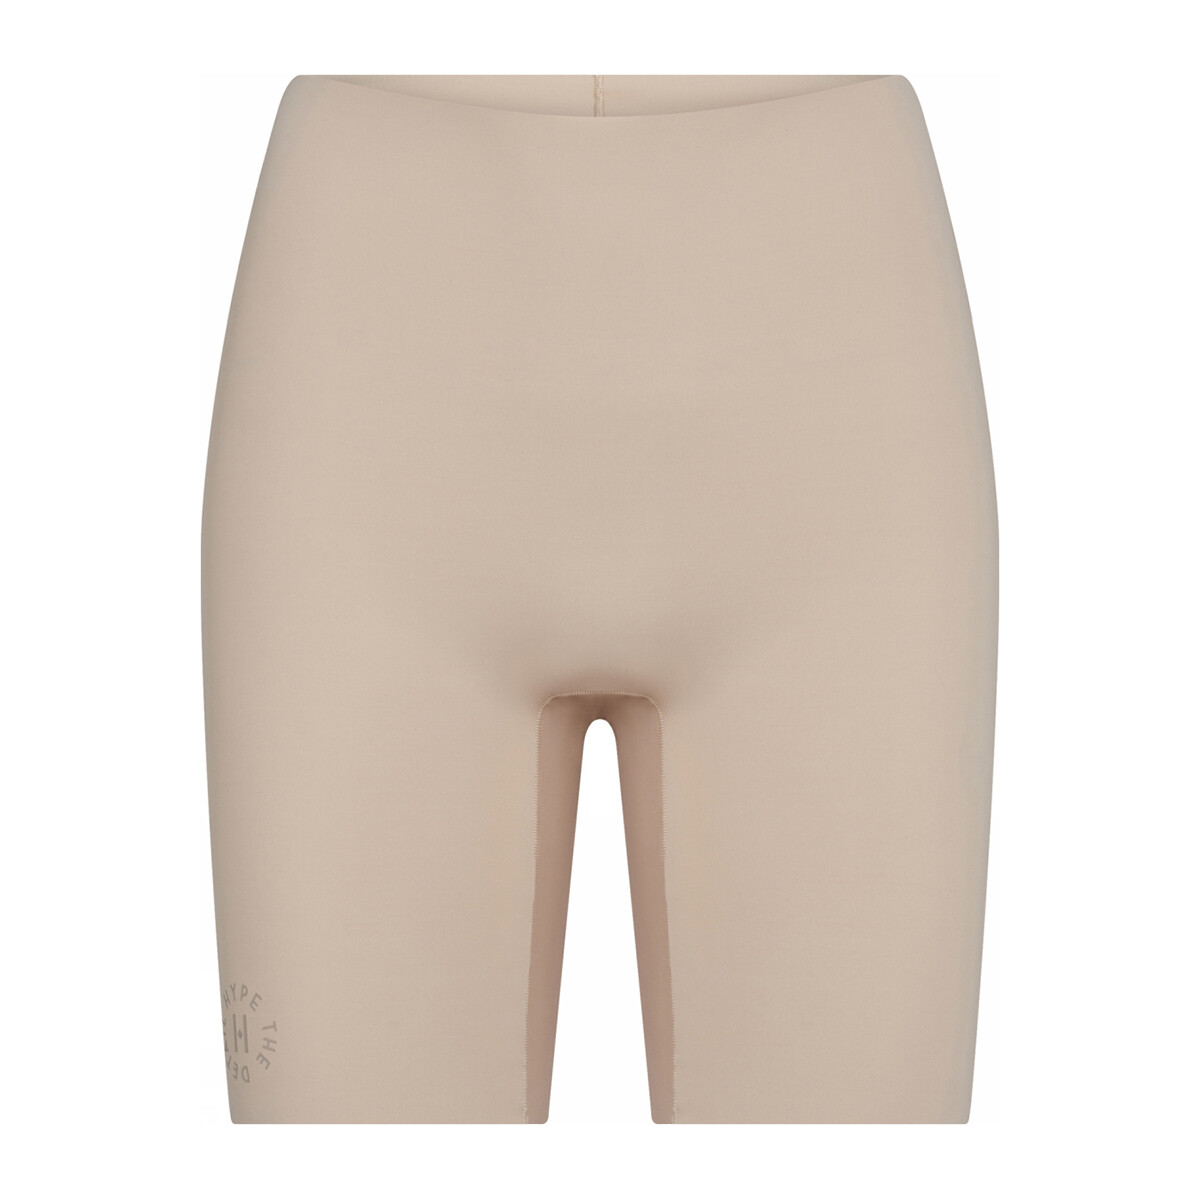 6: Hype The Detail Essentials Shorts, Farve: Beige, Størrelse: XS, Dame